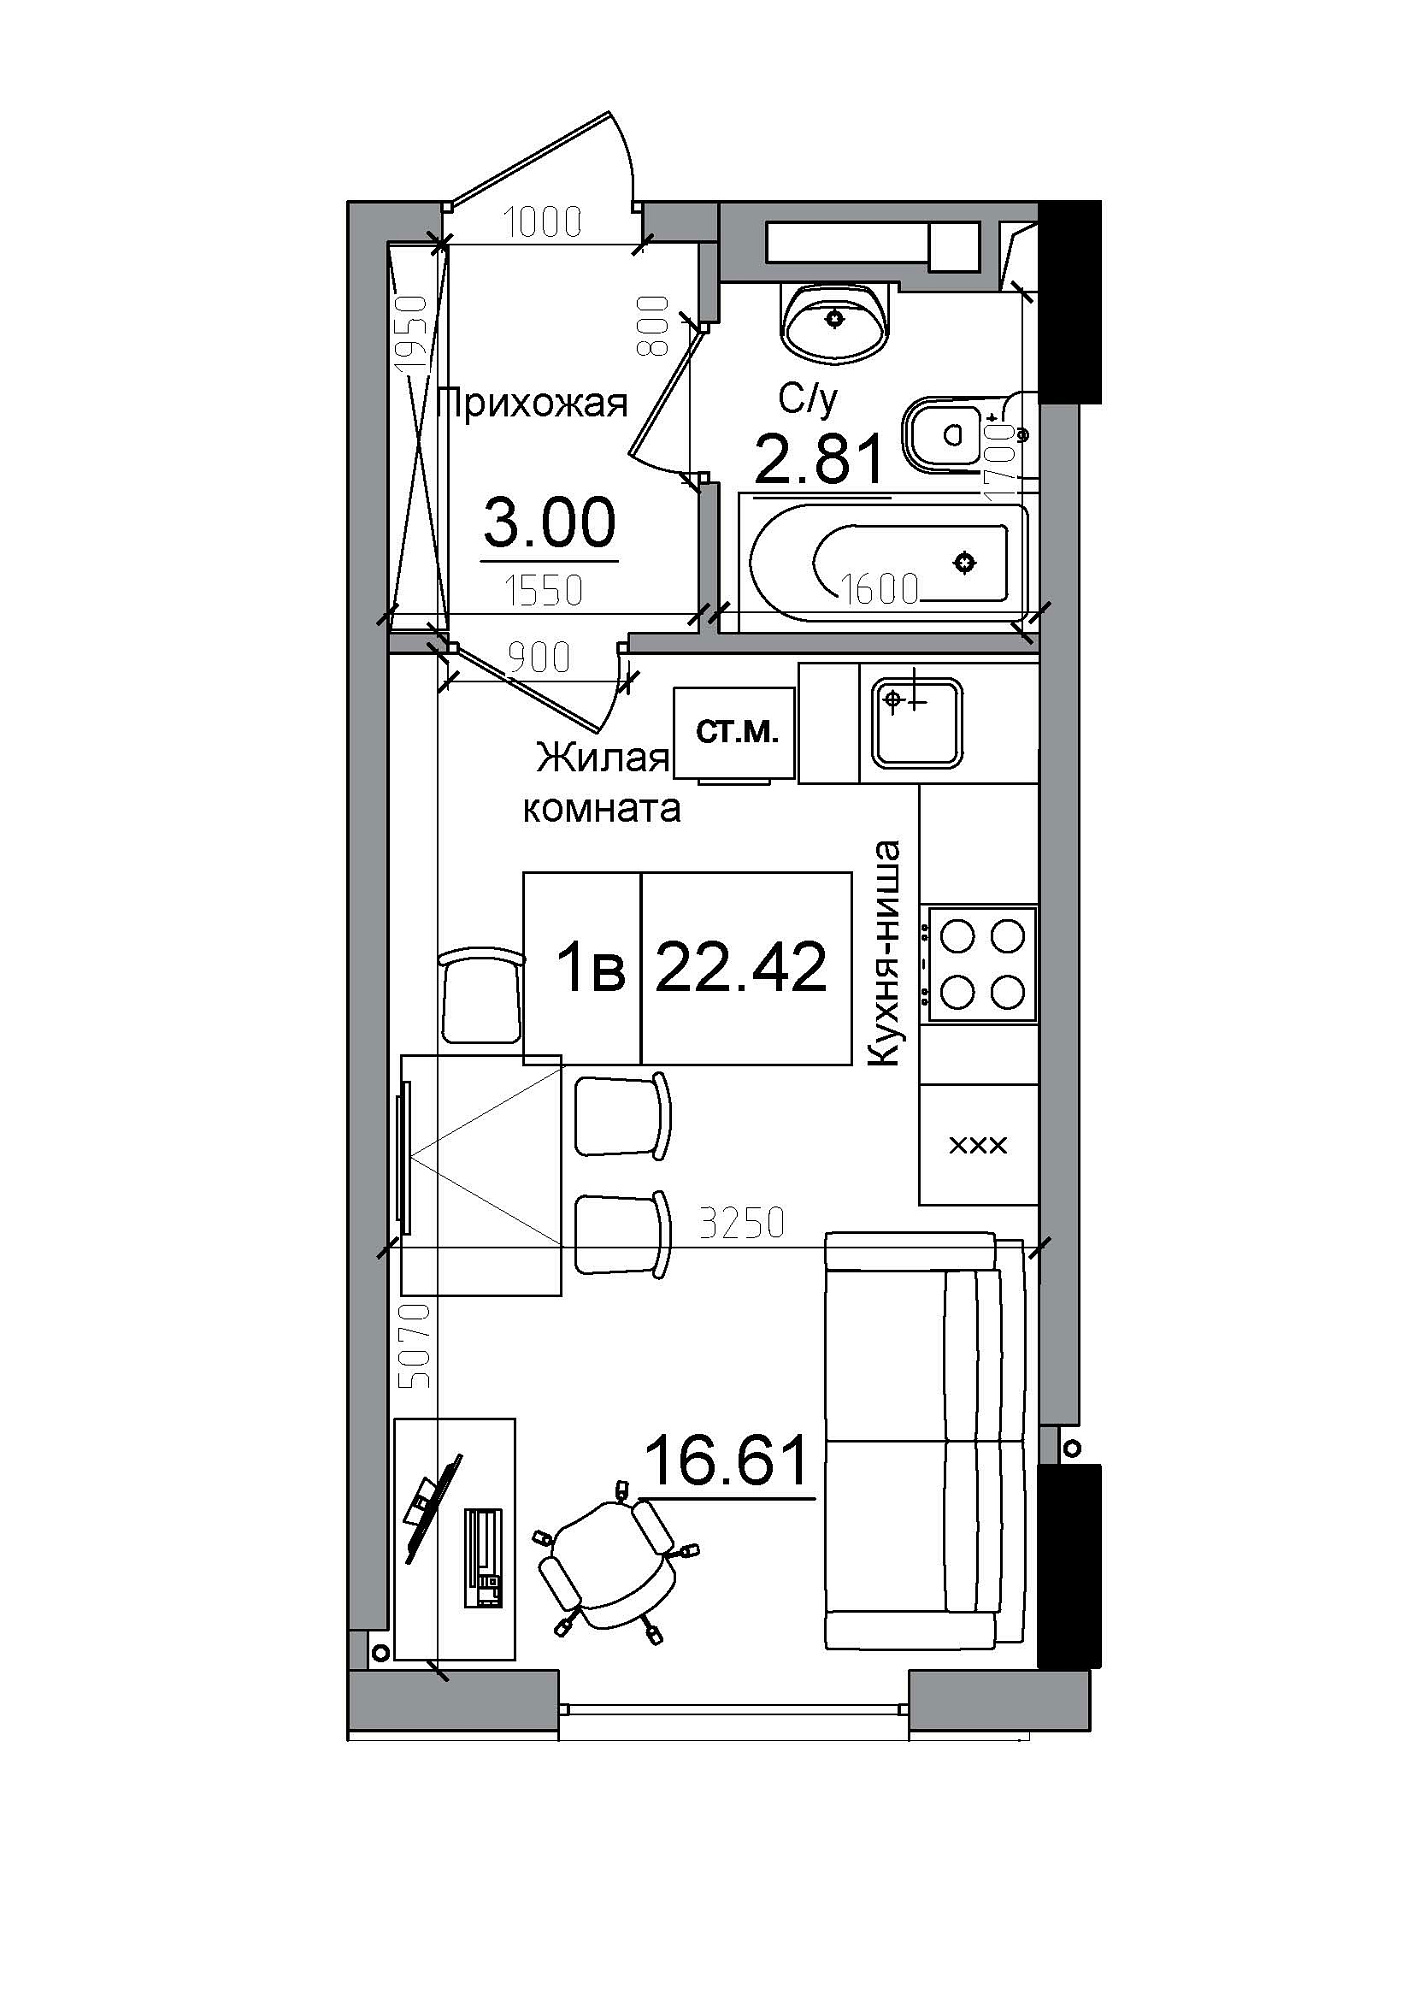 Planning Smart flats area 22.42m2, AB-12-03/00003.